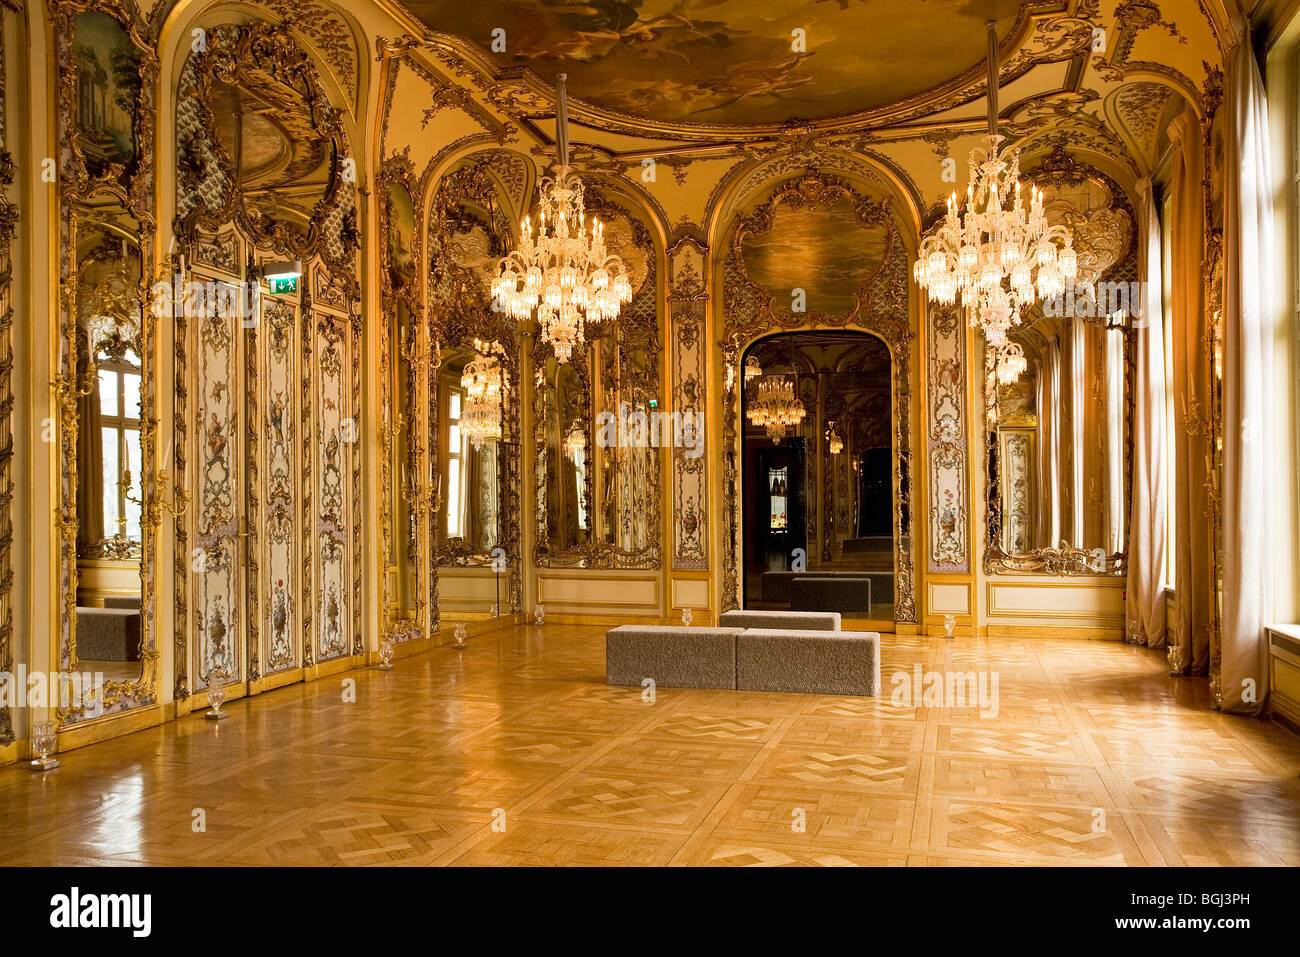 BACCARAT MUSEUM, PARIS Stock Photo: 27442985 - Alamy